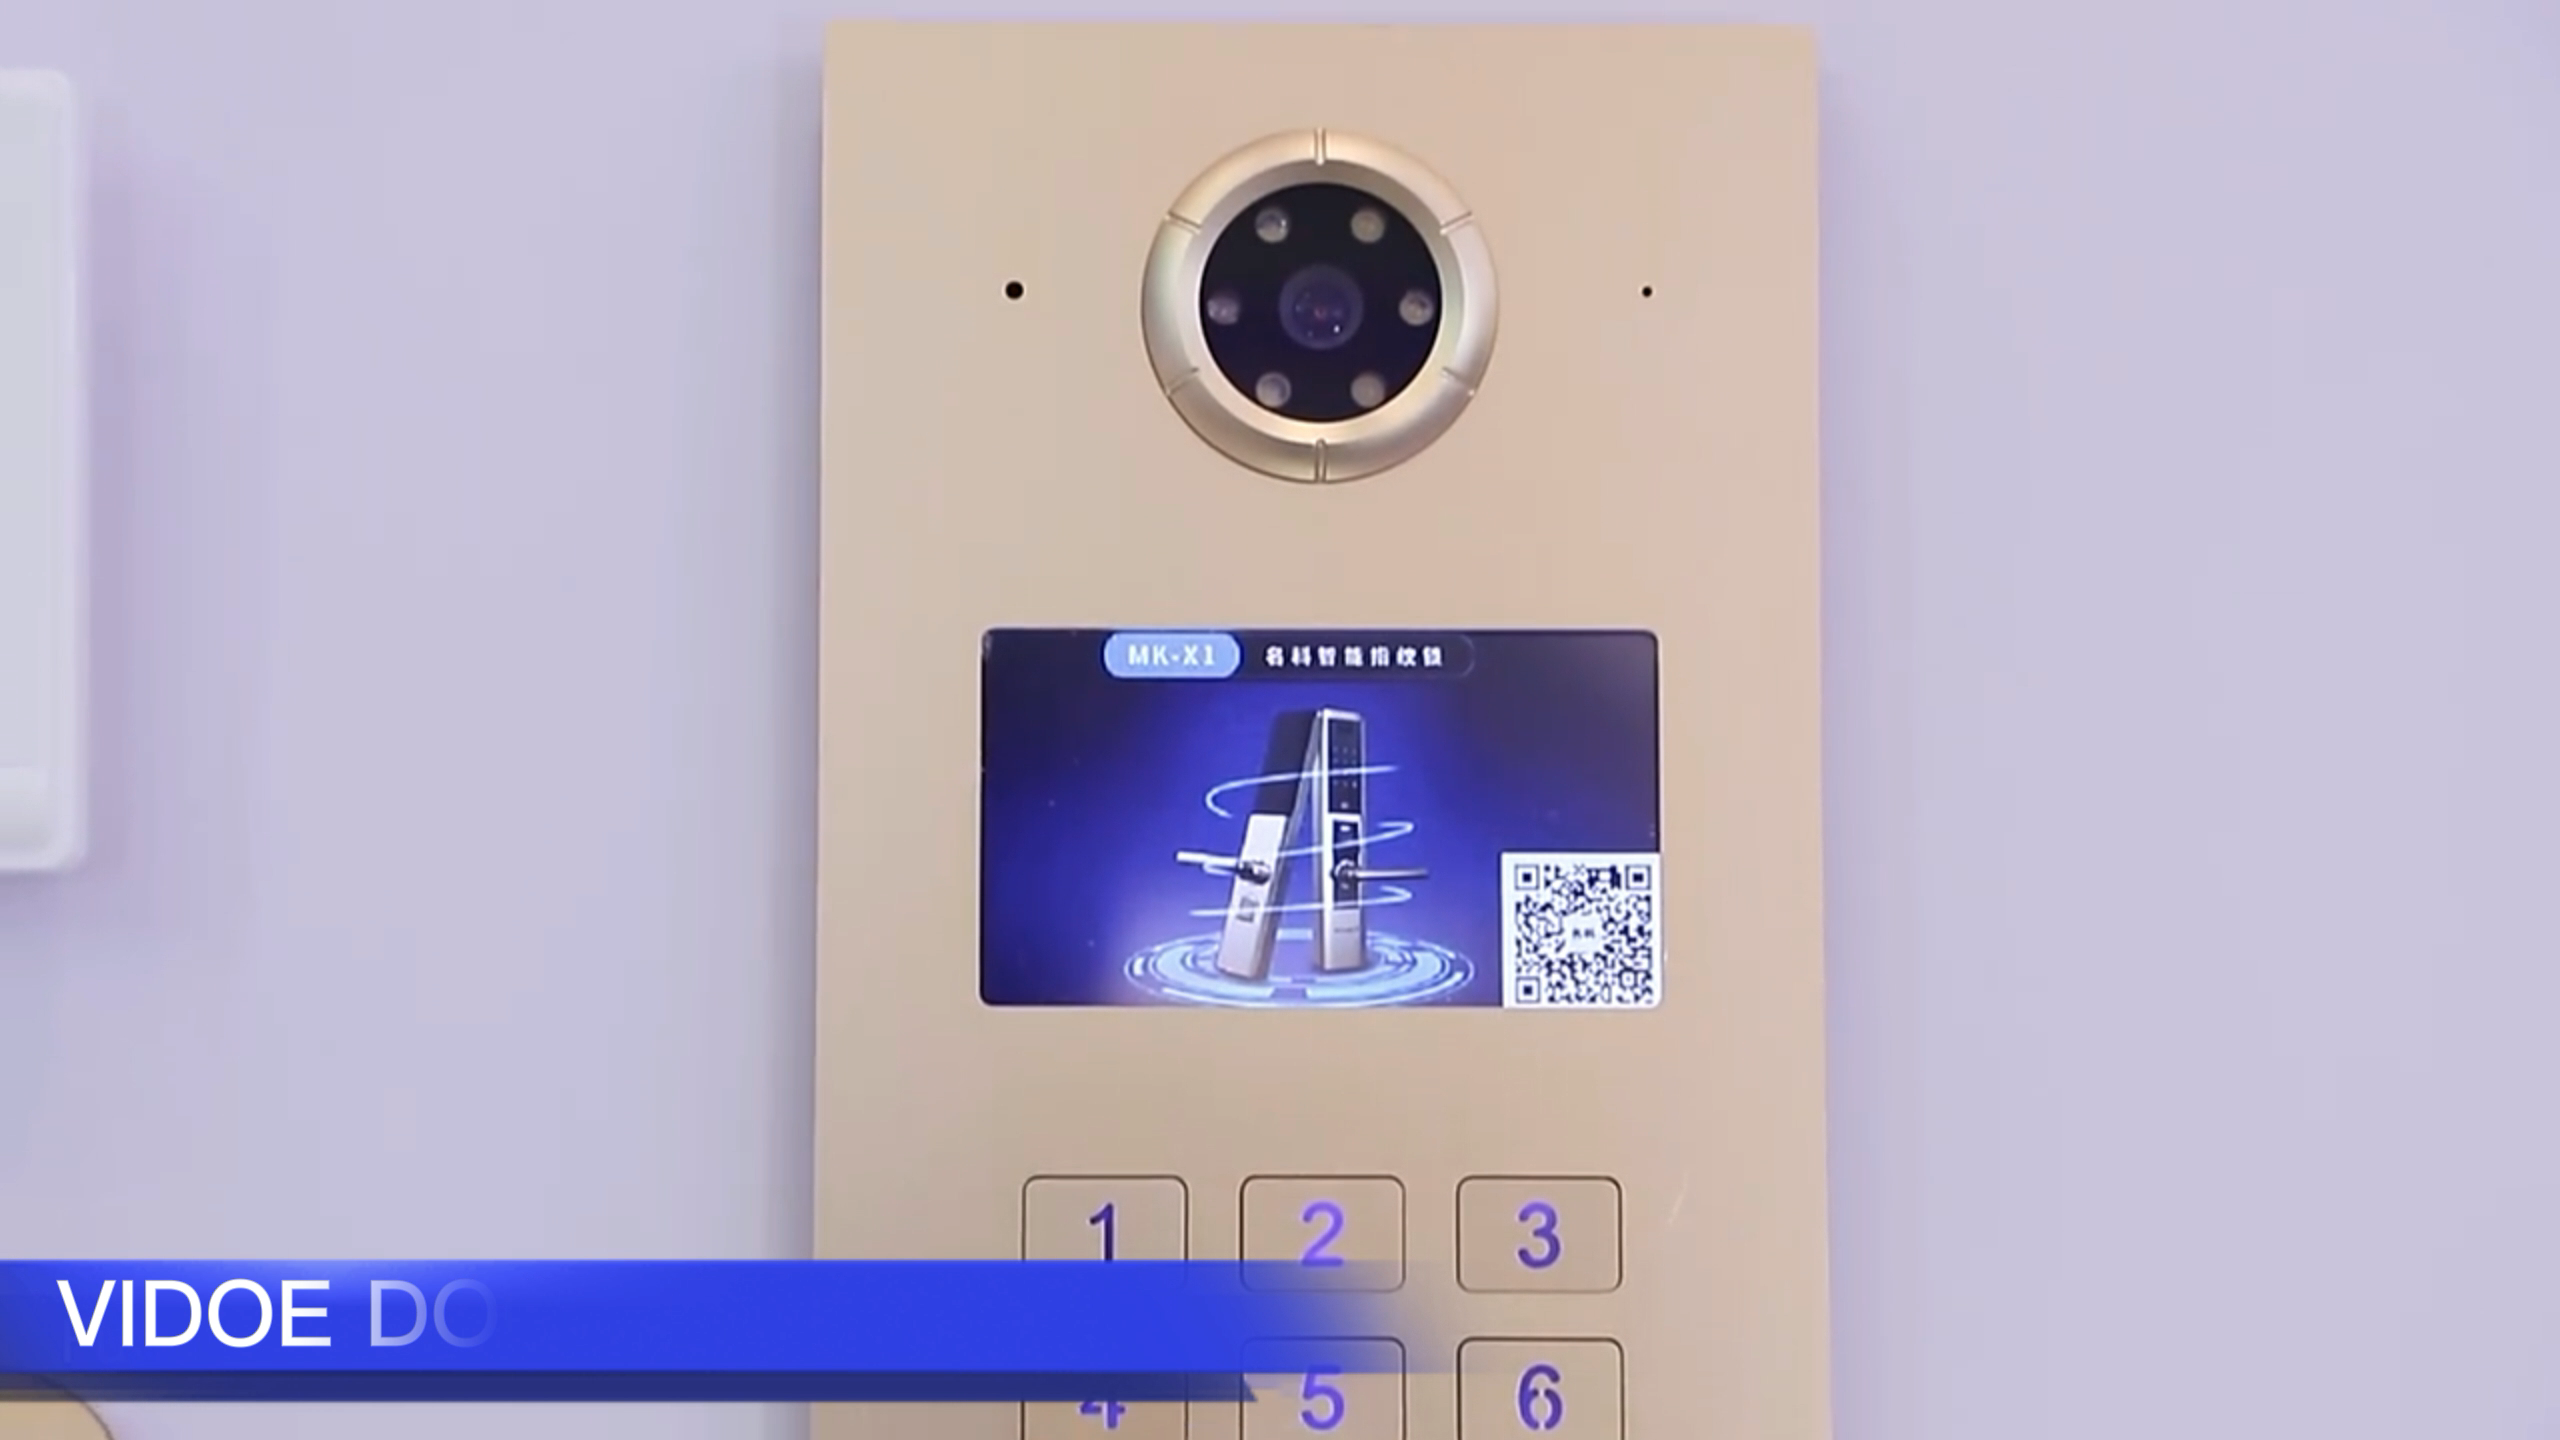 IP video intercom system for multi-apartments apartments doorbell high resolution screen visual doorbell1